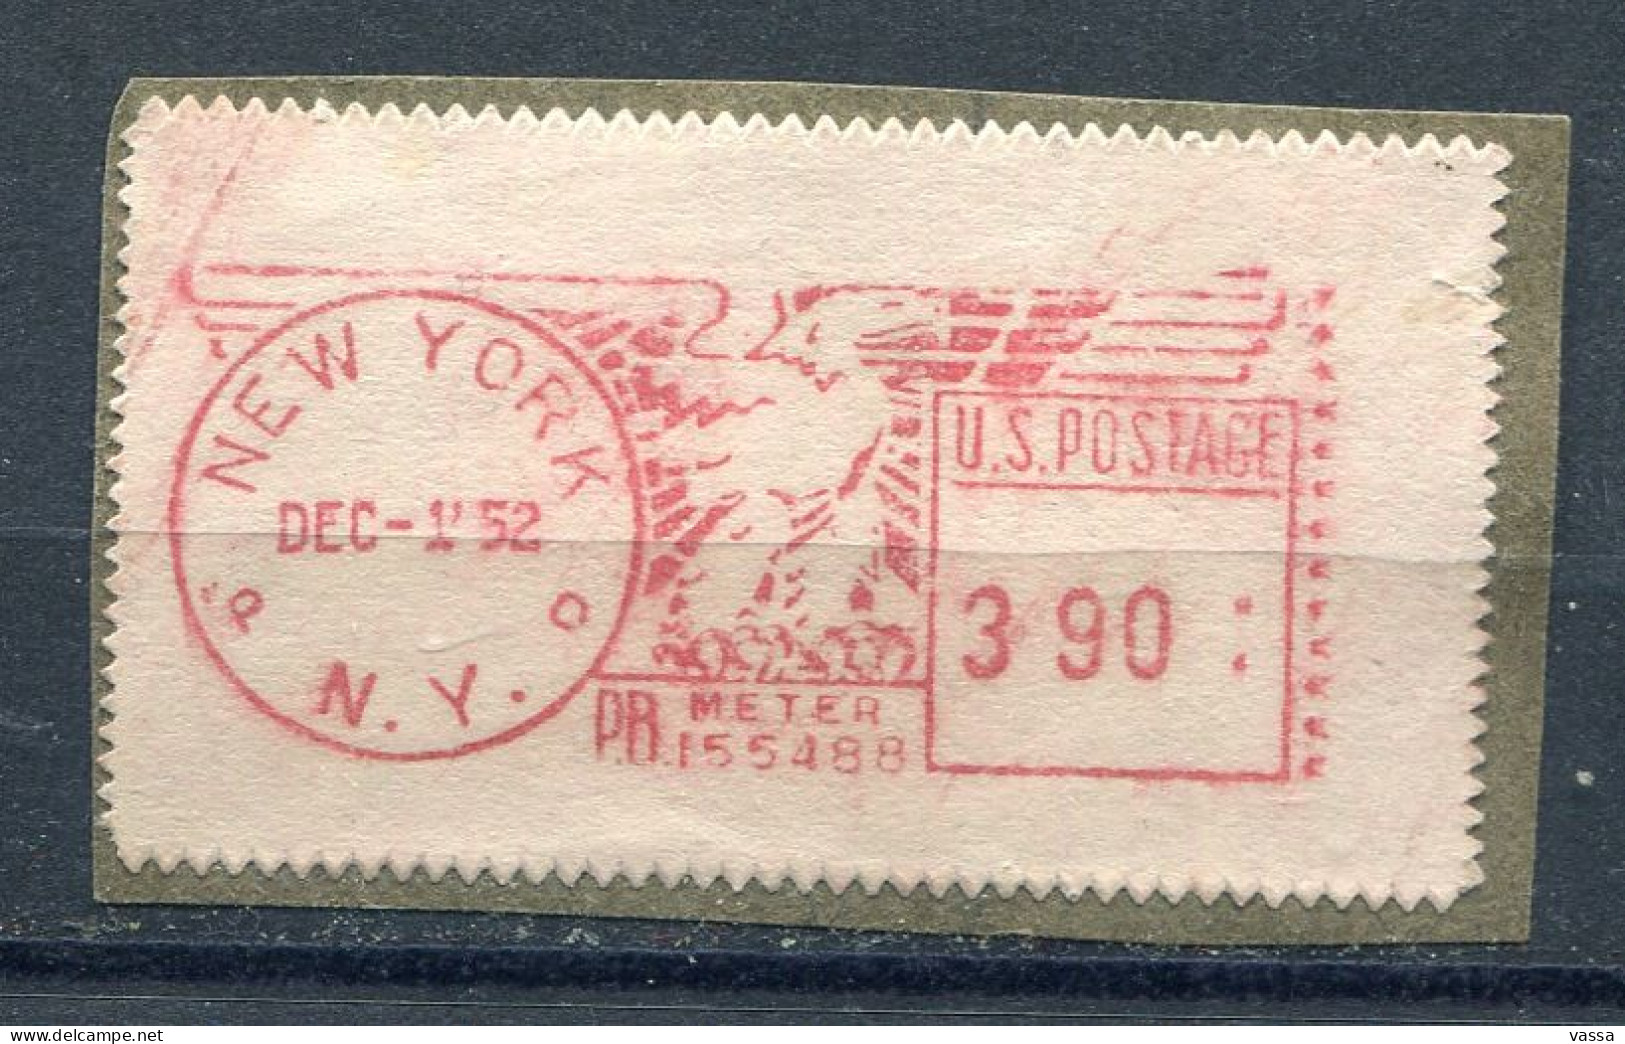 USA -1952 - PB Meter N°155488 PB - New-York  / Fragment- Aigle - Gebraucht